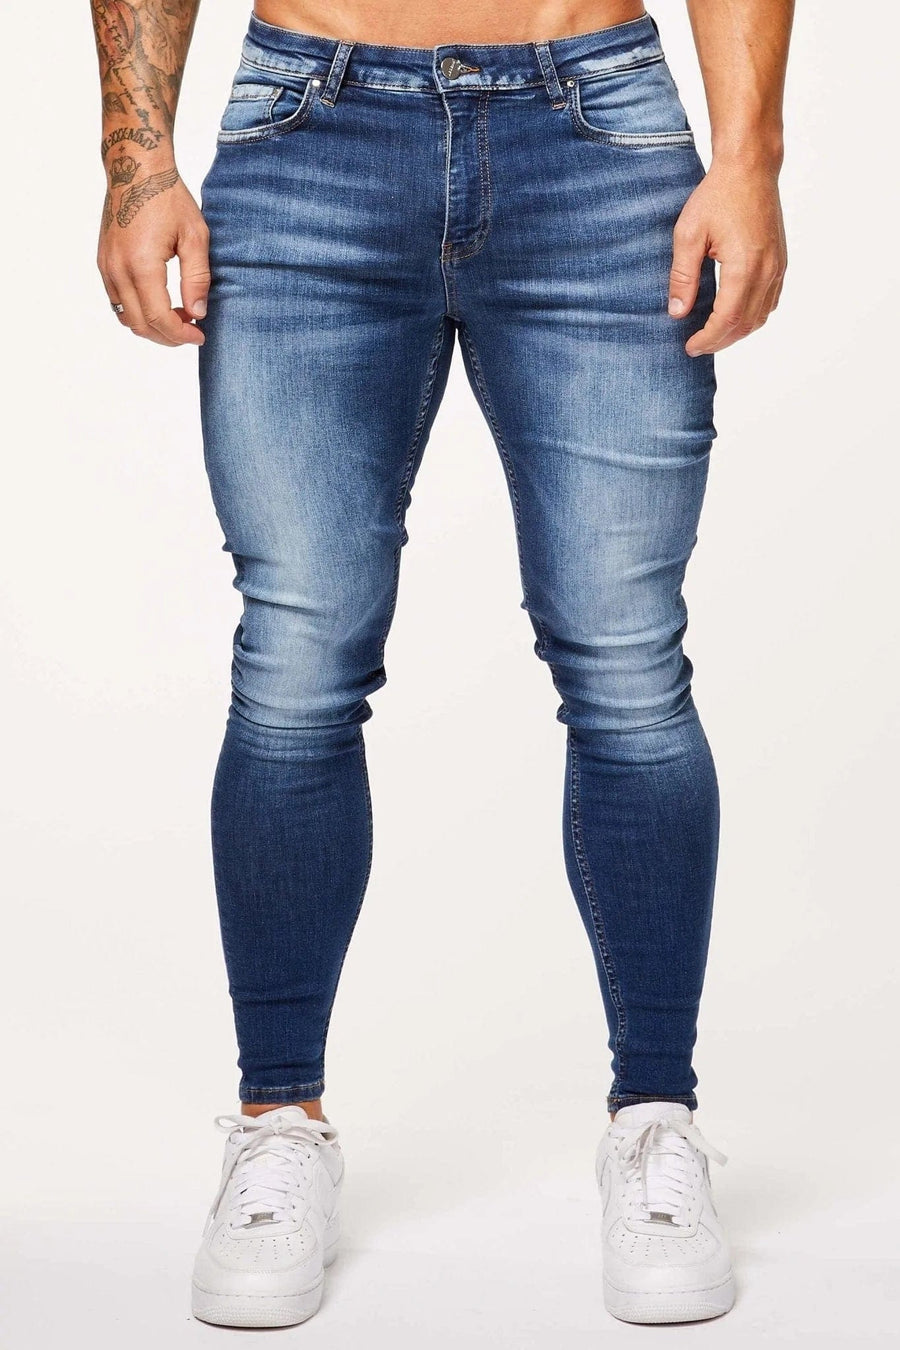 Legend London Jeans SPRAY ON JEANS - BLUE HIGHLIGHT WASH